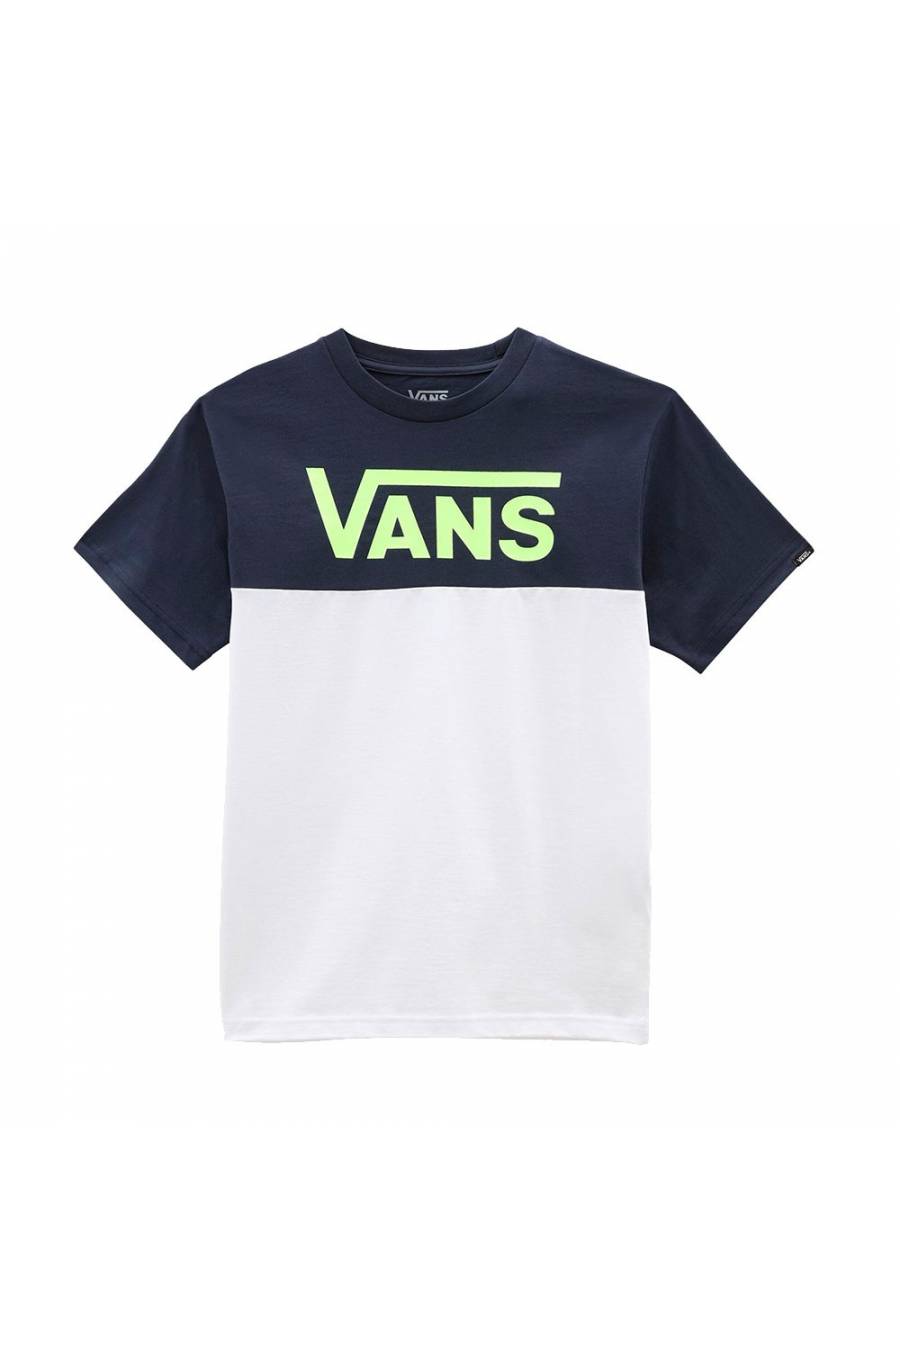 Camiseta Vans Classic VN0A7SH75S21